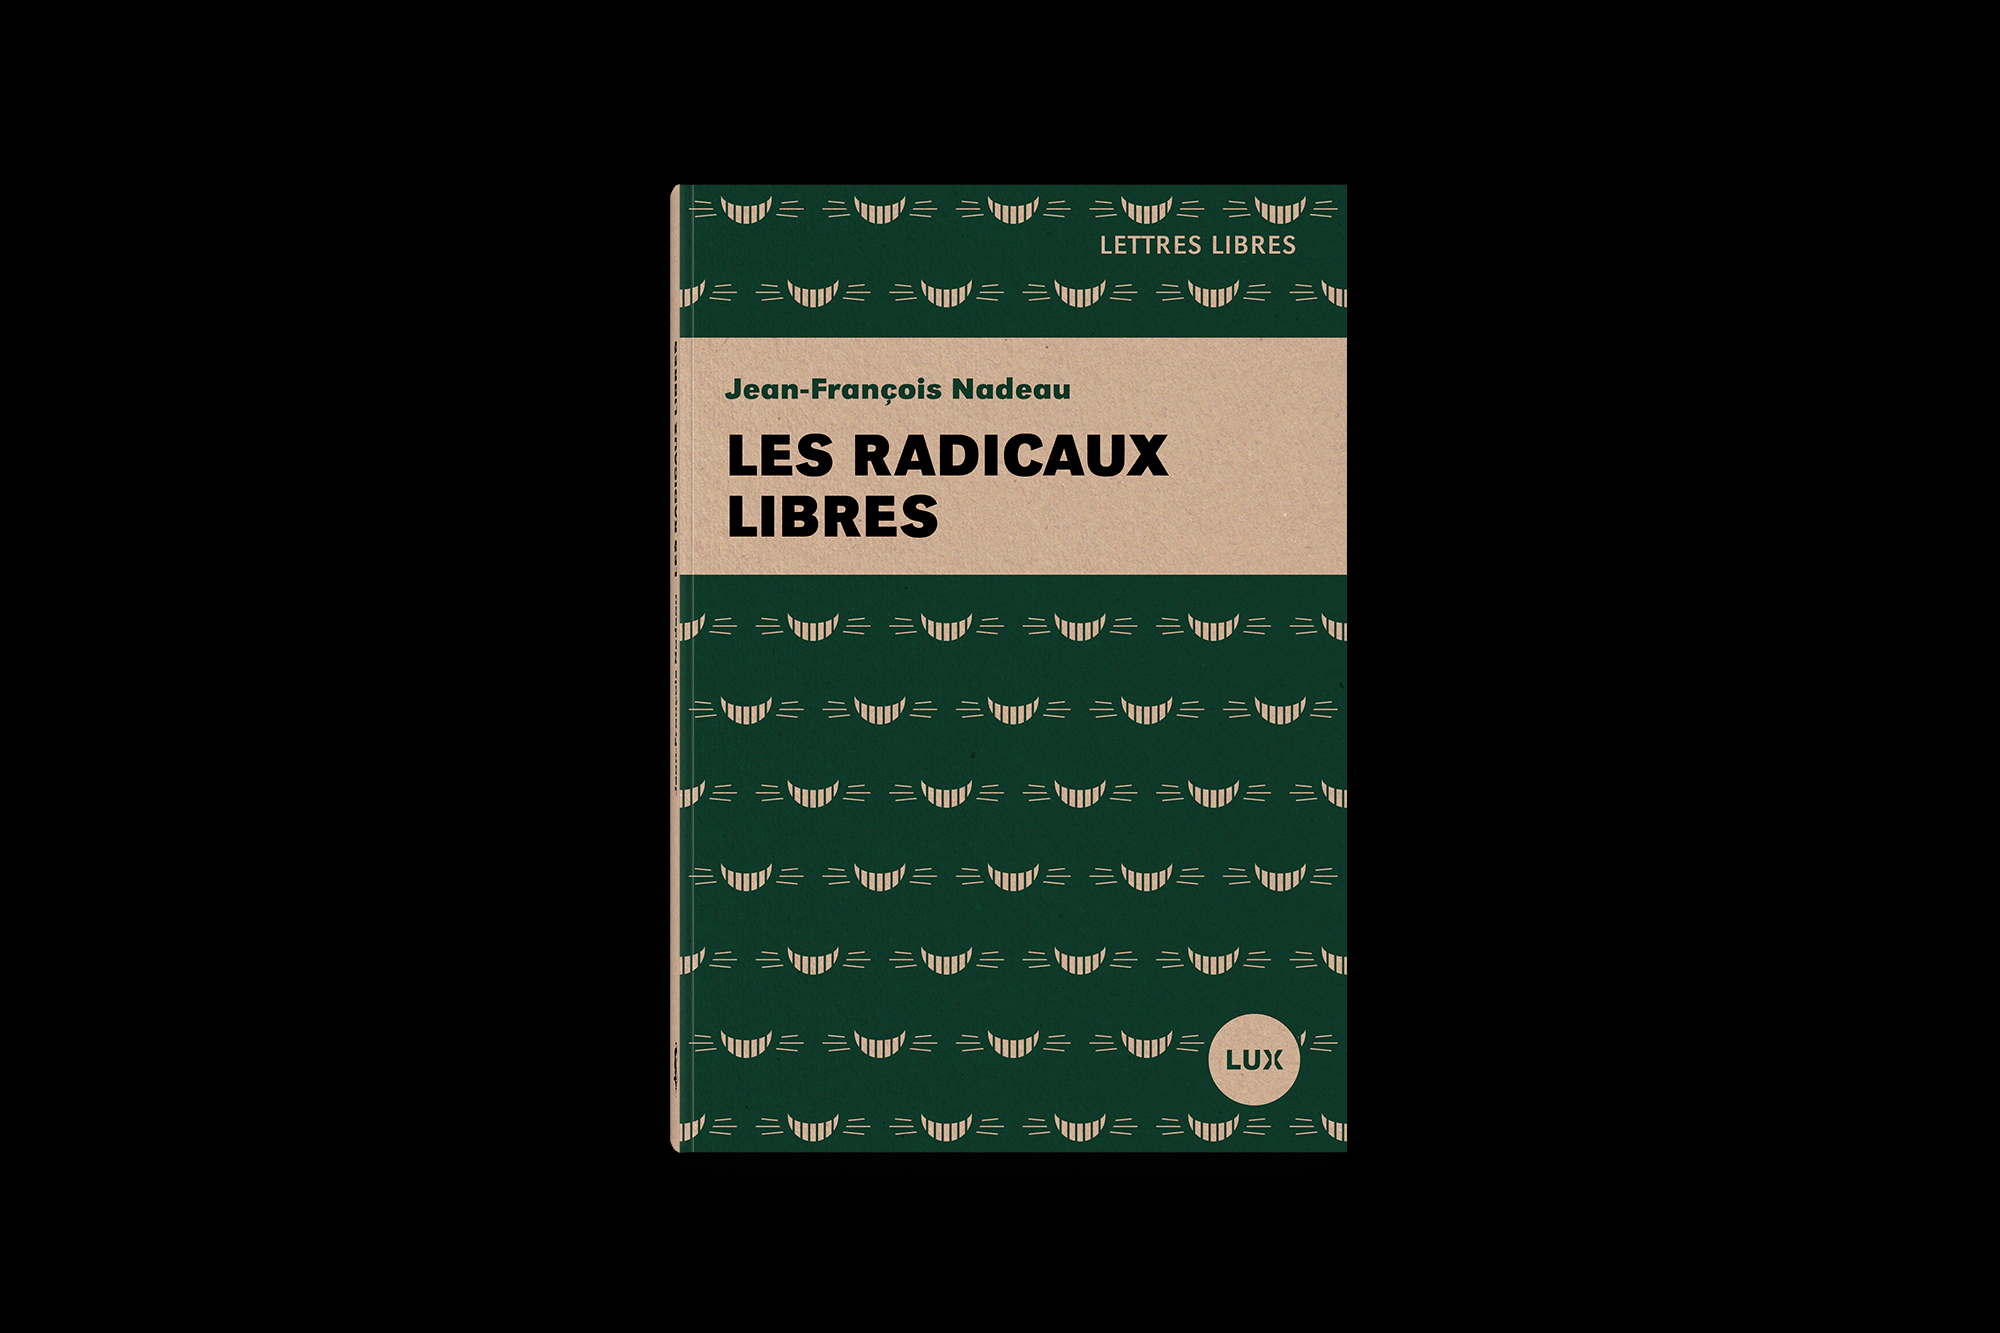 Lettres-libres-mockup-Les-radicaux-libres